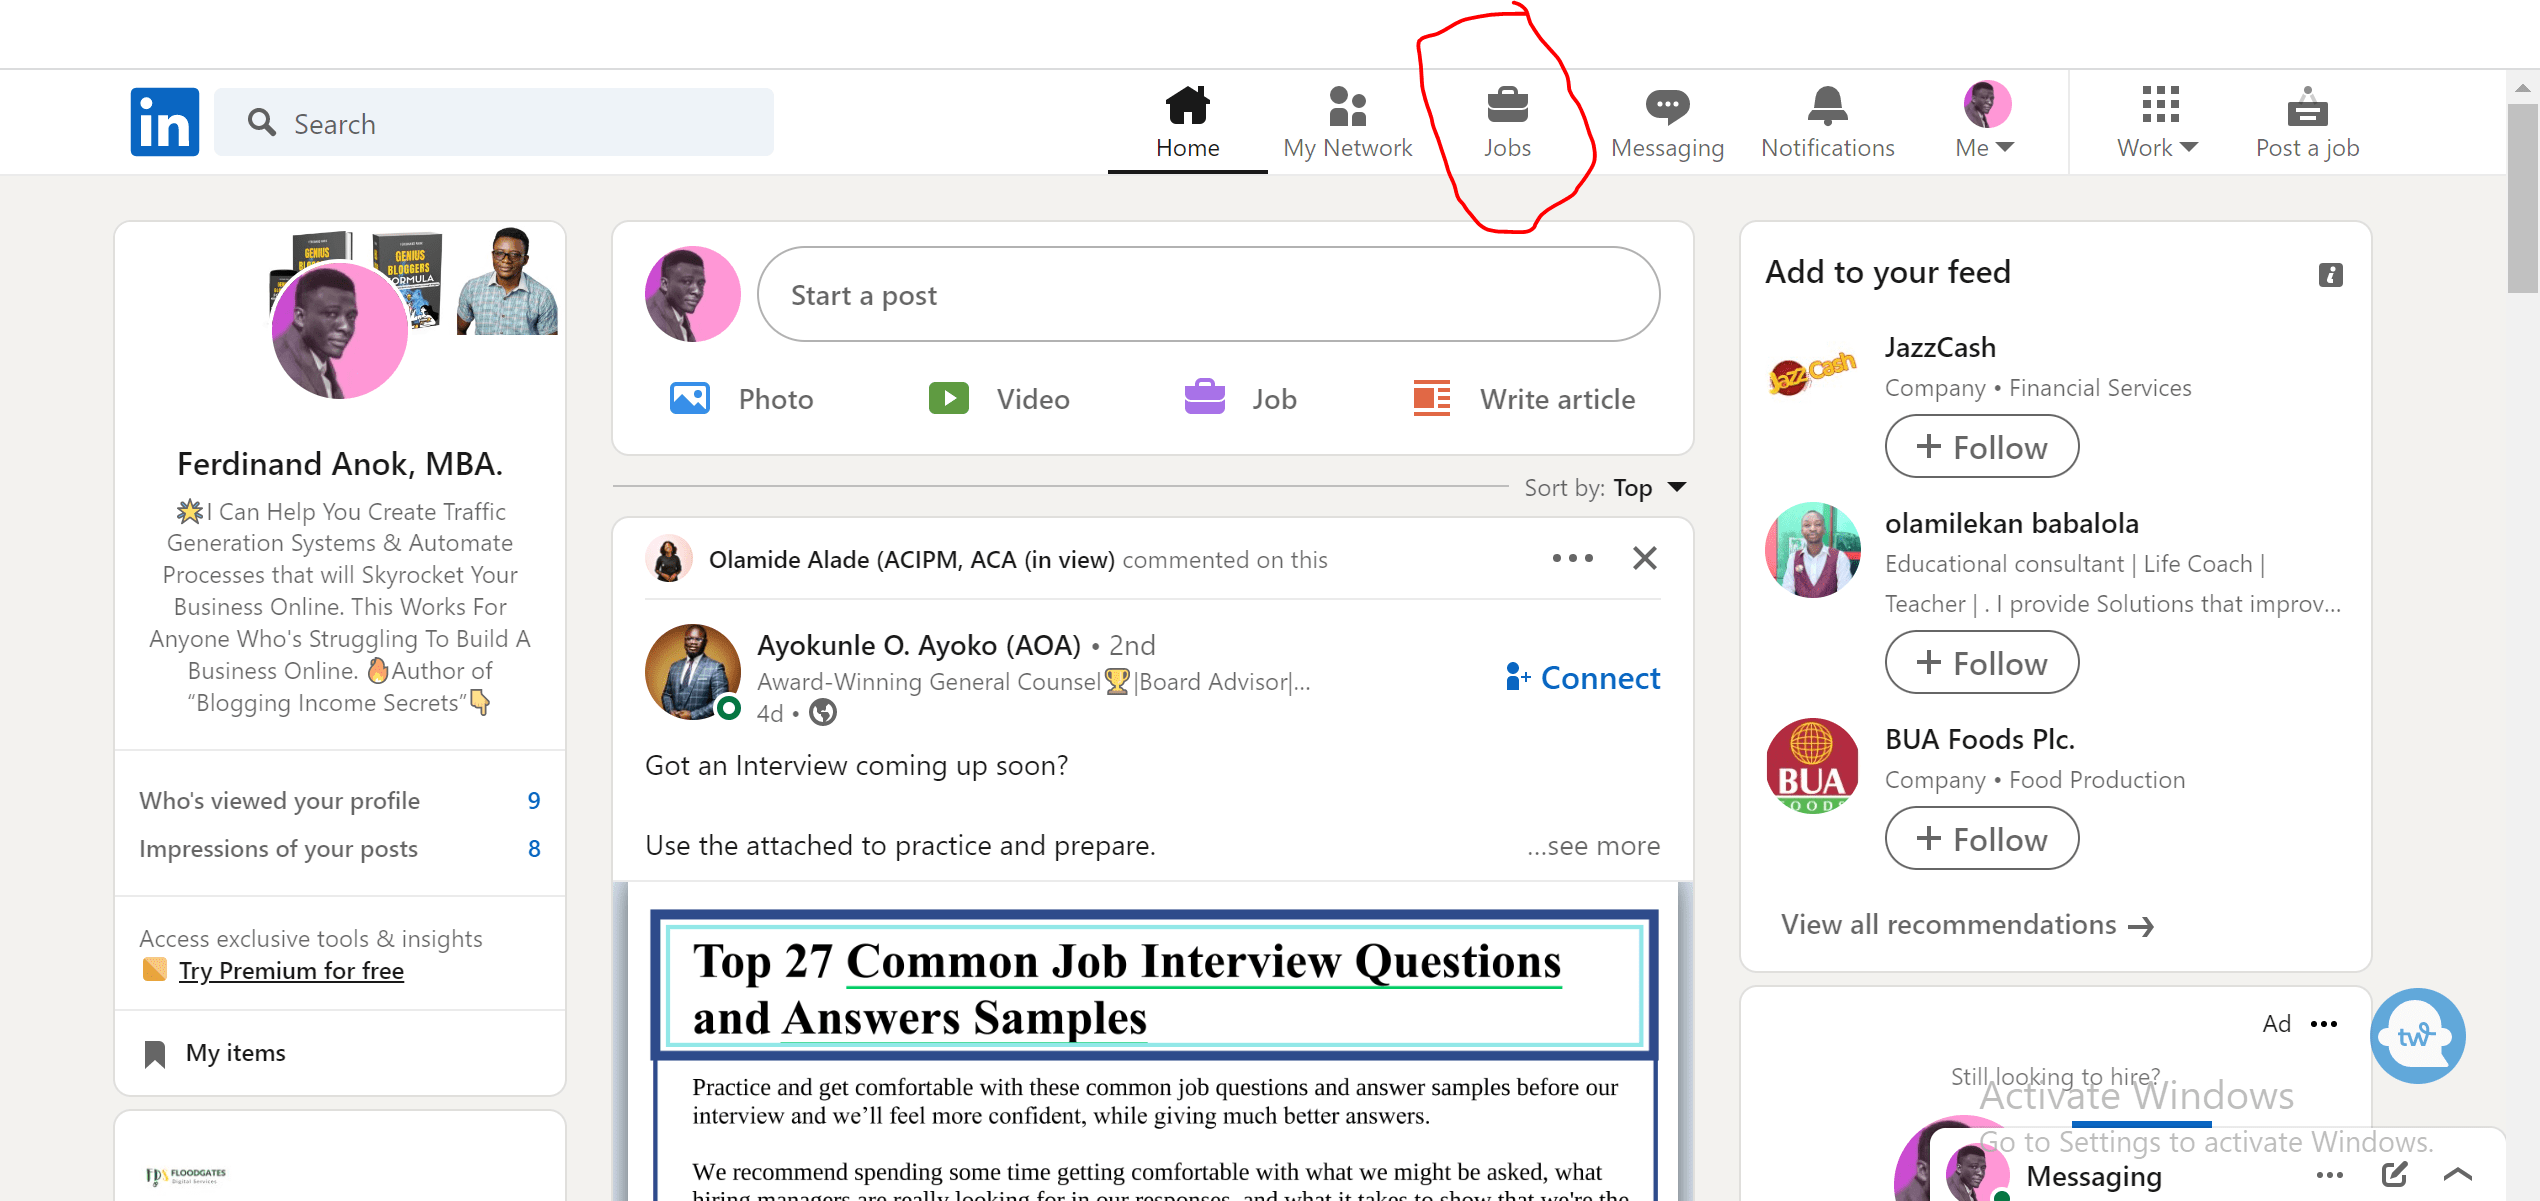 alt="How to find remote jobs on LinkedIn"